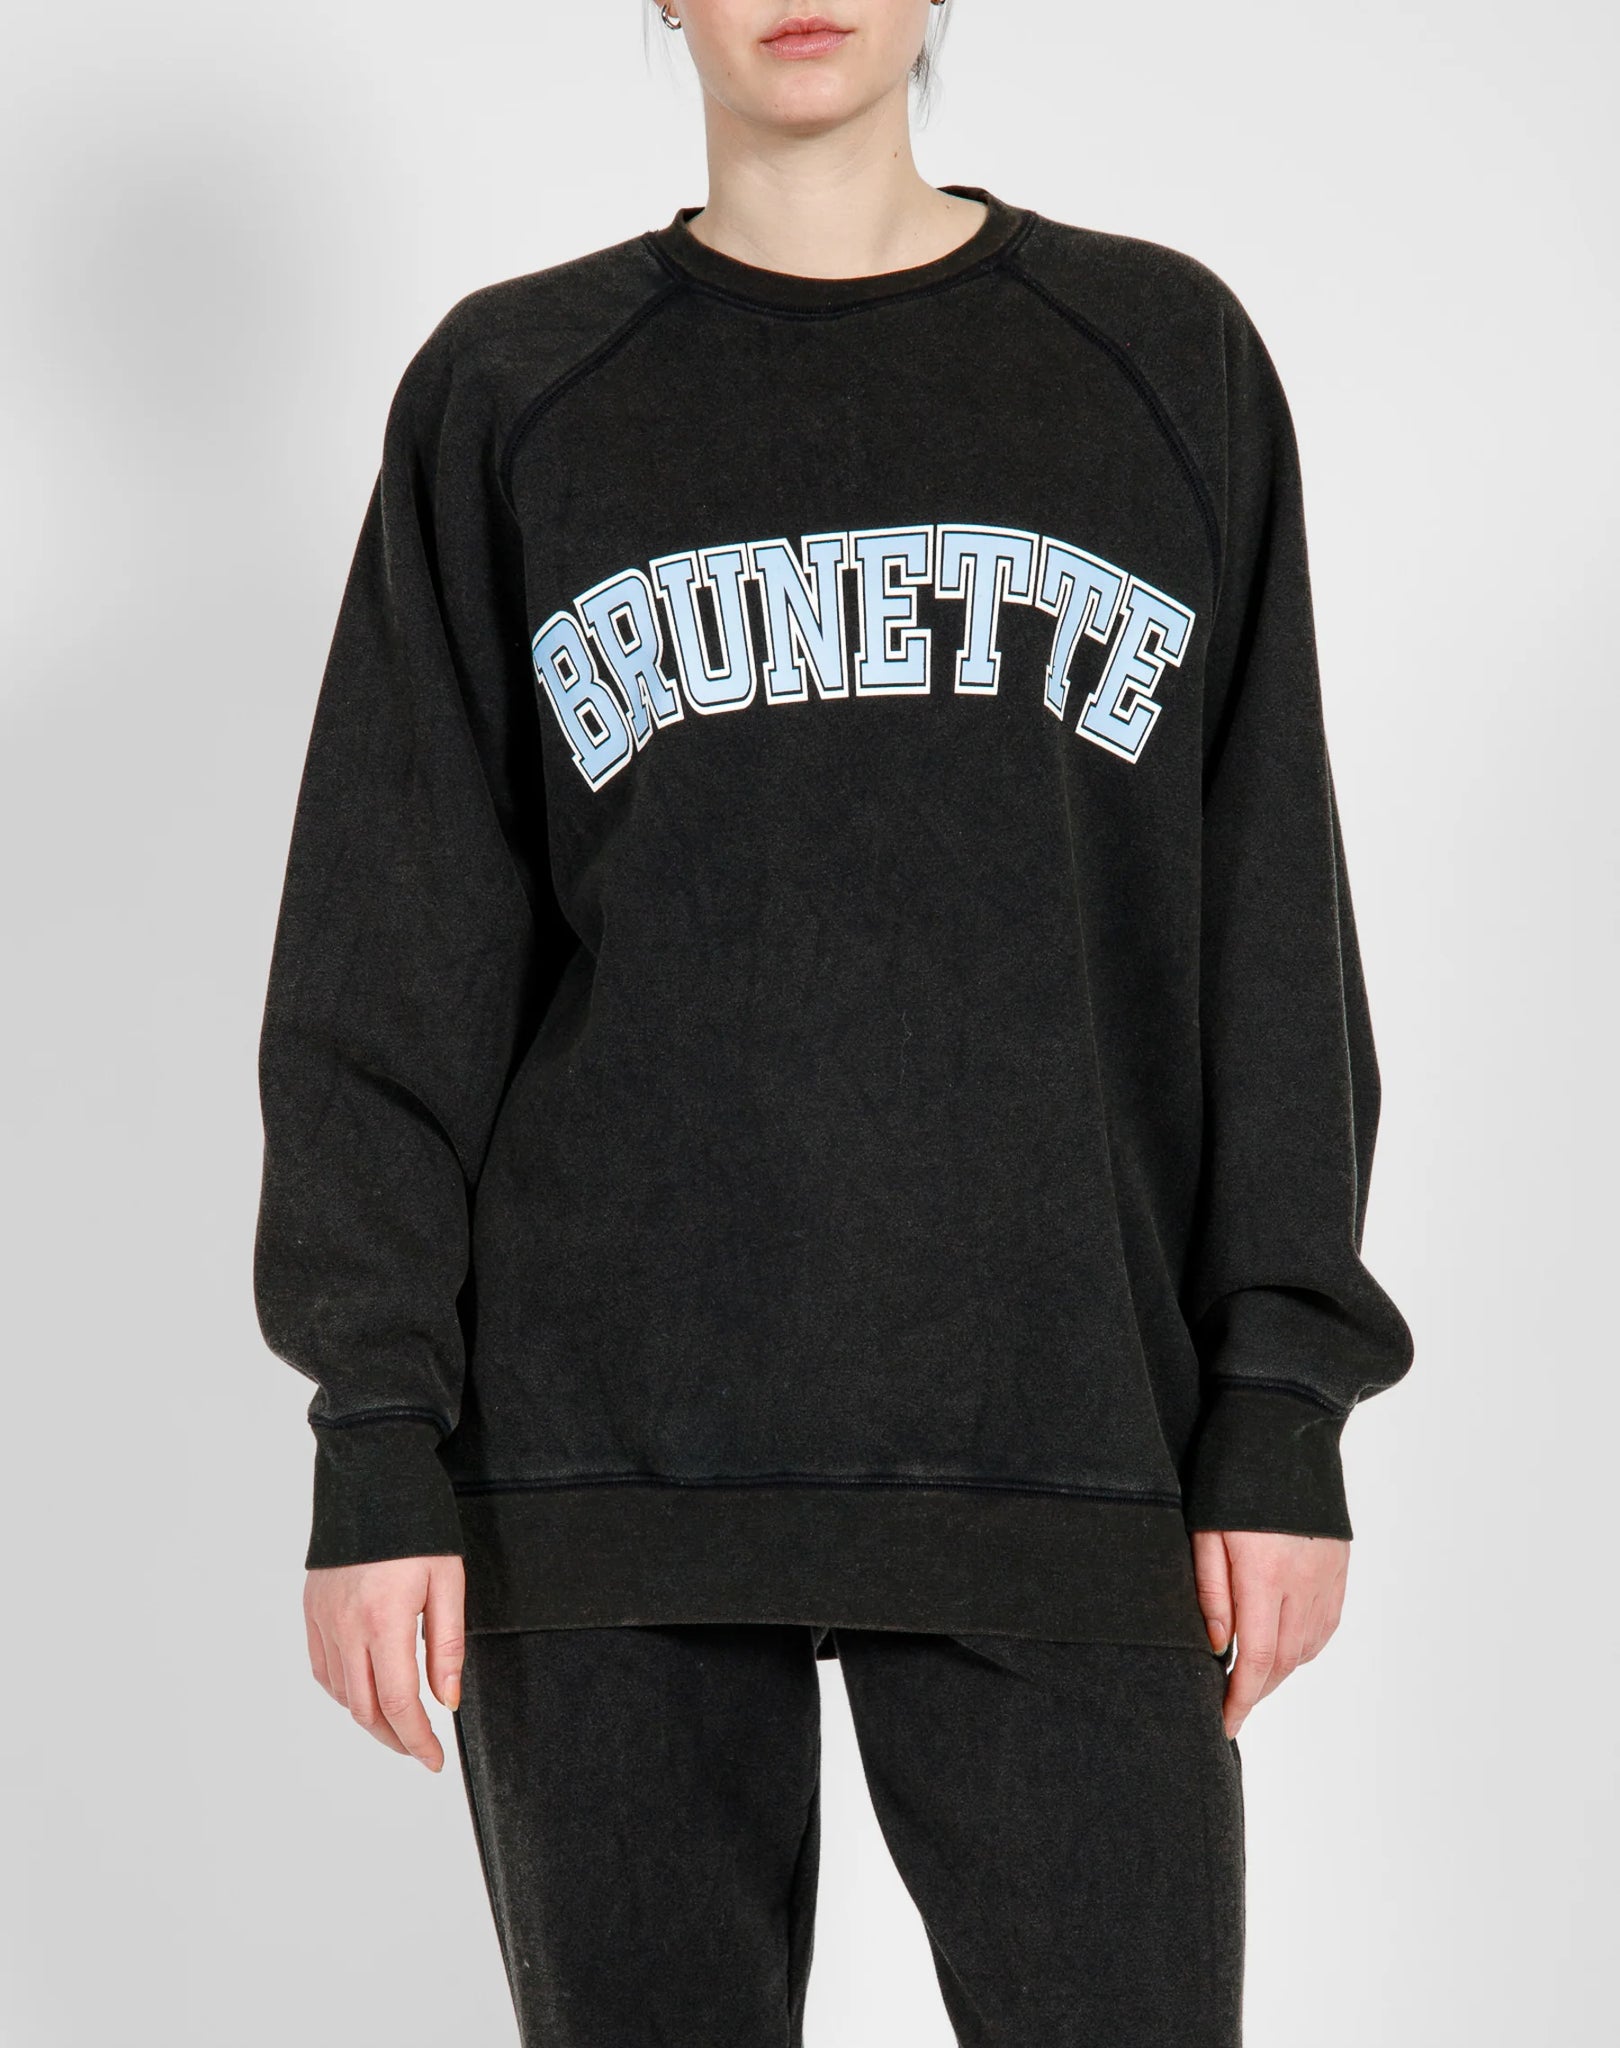 Brunette The Label Brunette NYBF Sweatshirt WBLK